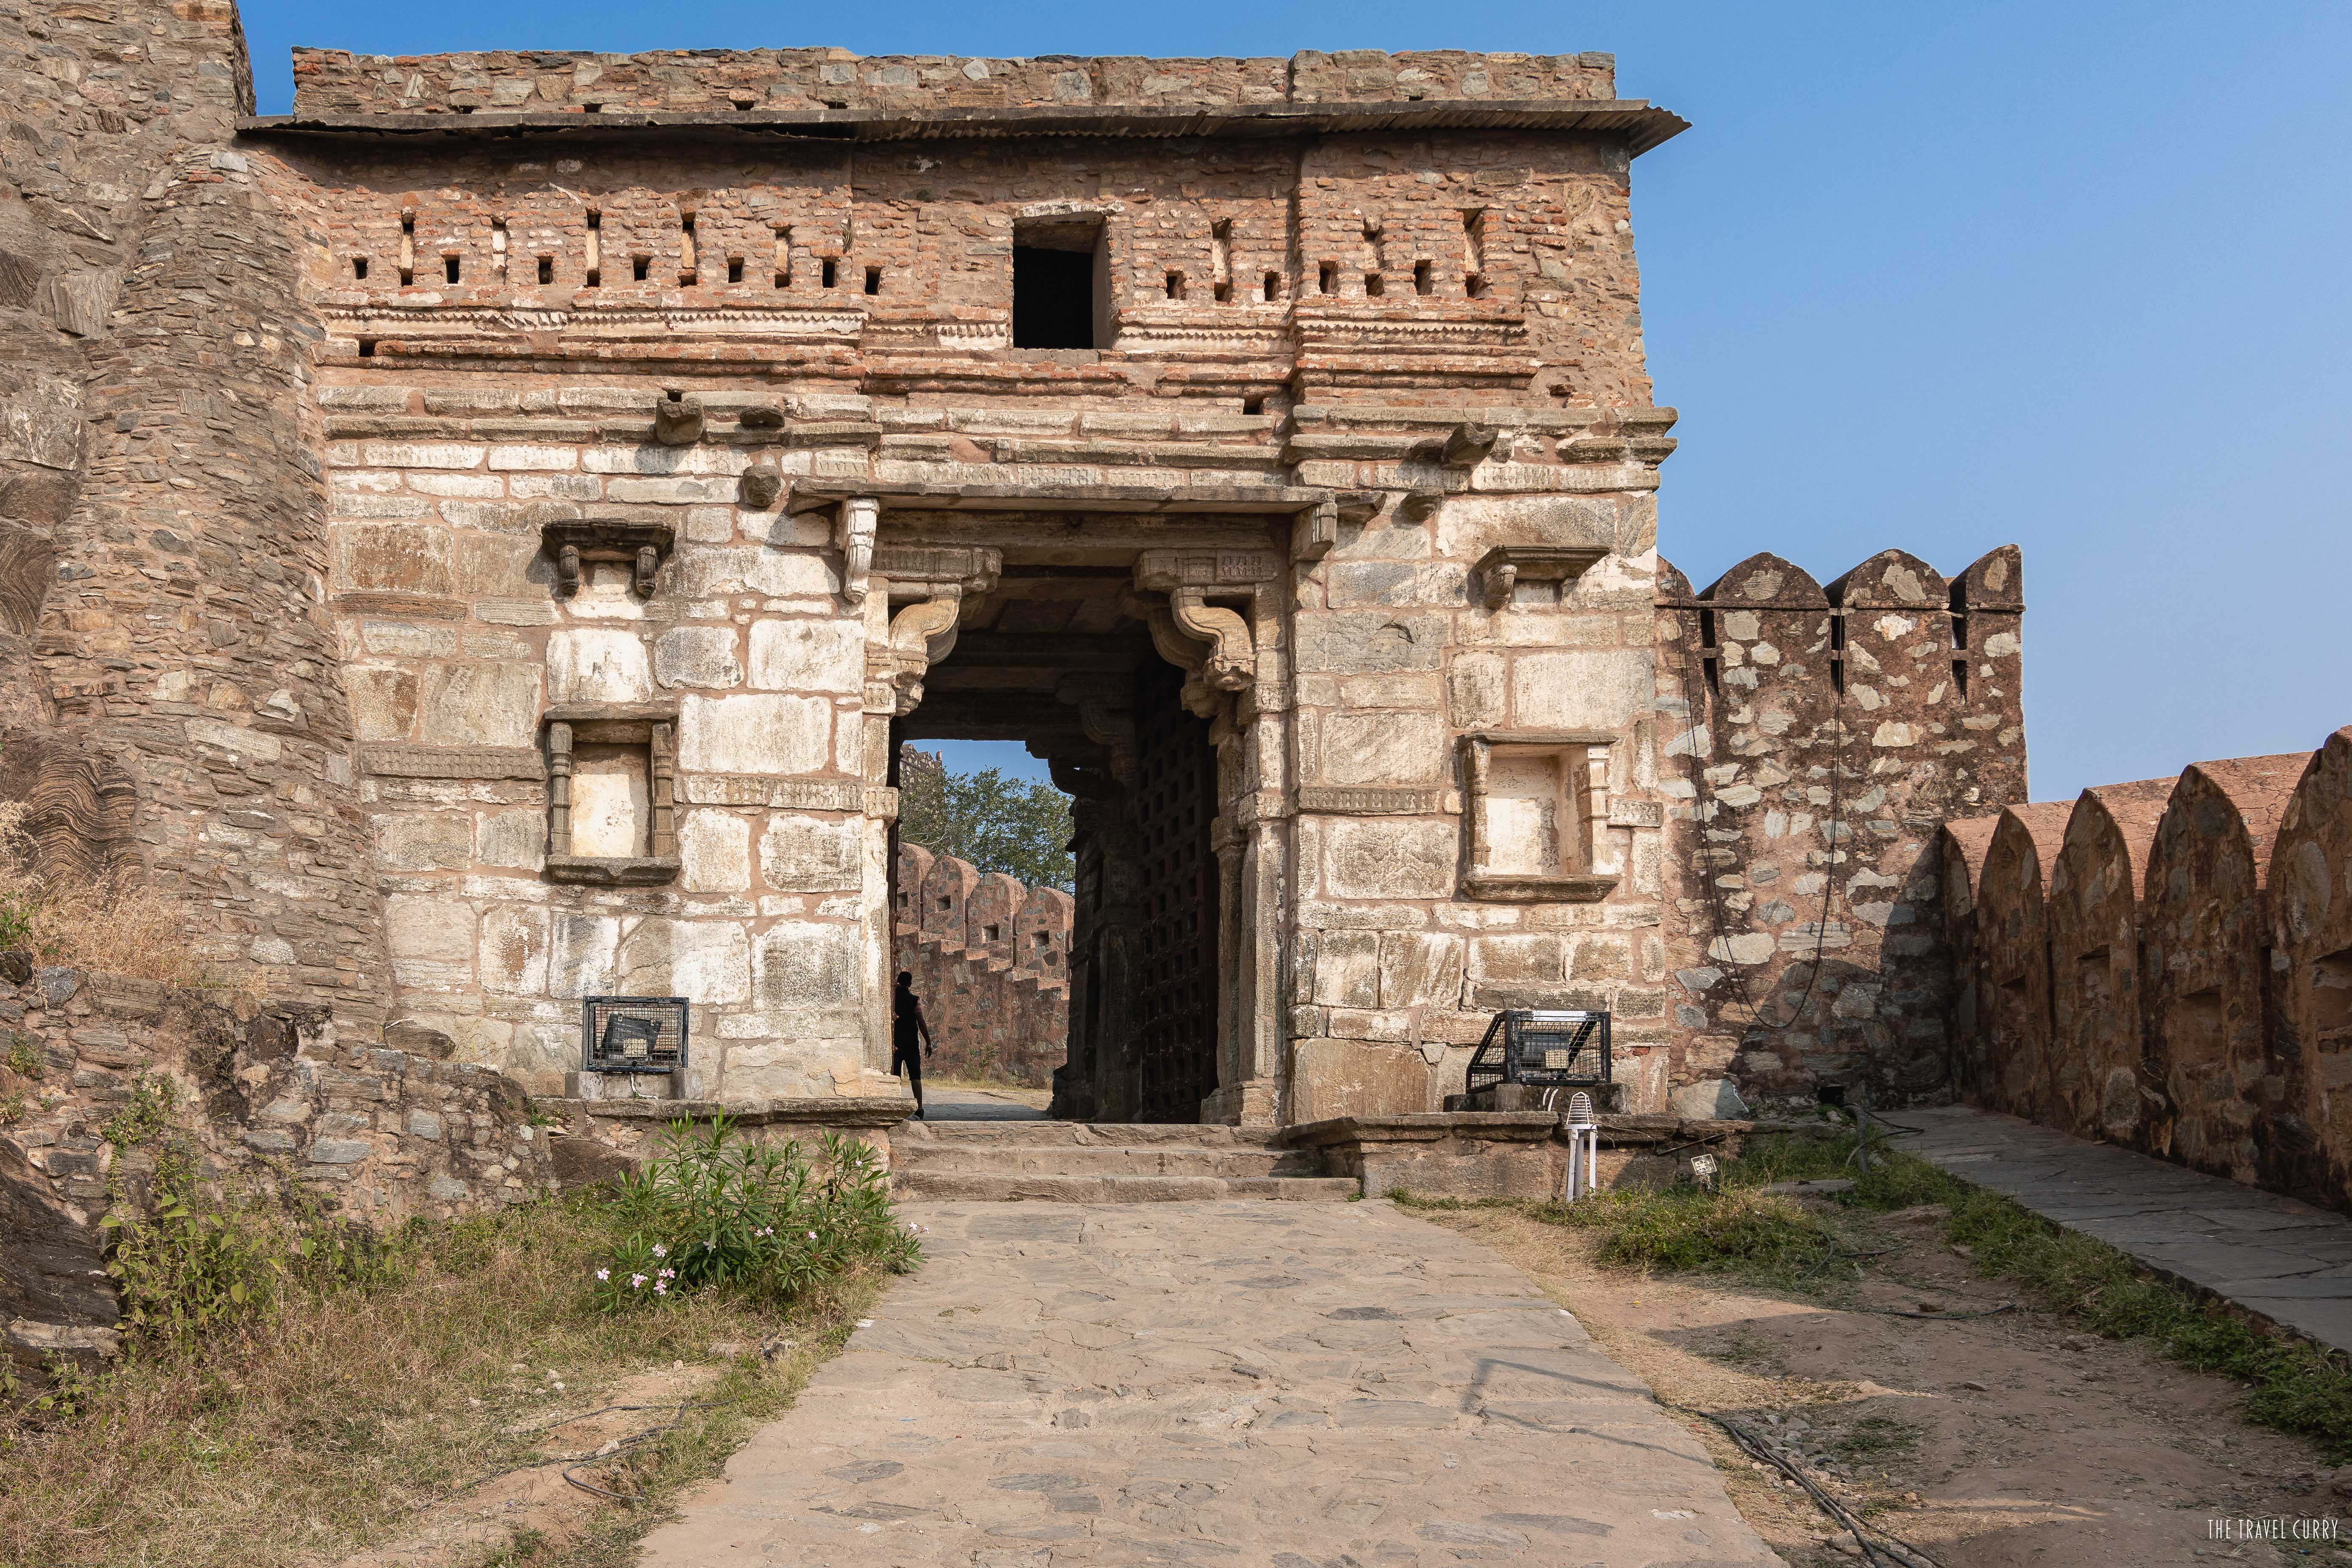 An elaborate gate inside Kumbhalgarh Fort